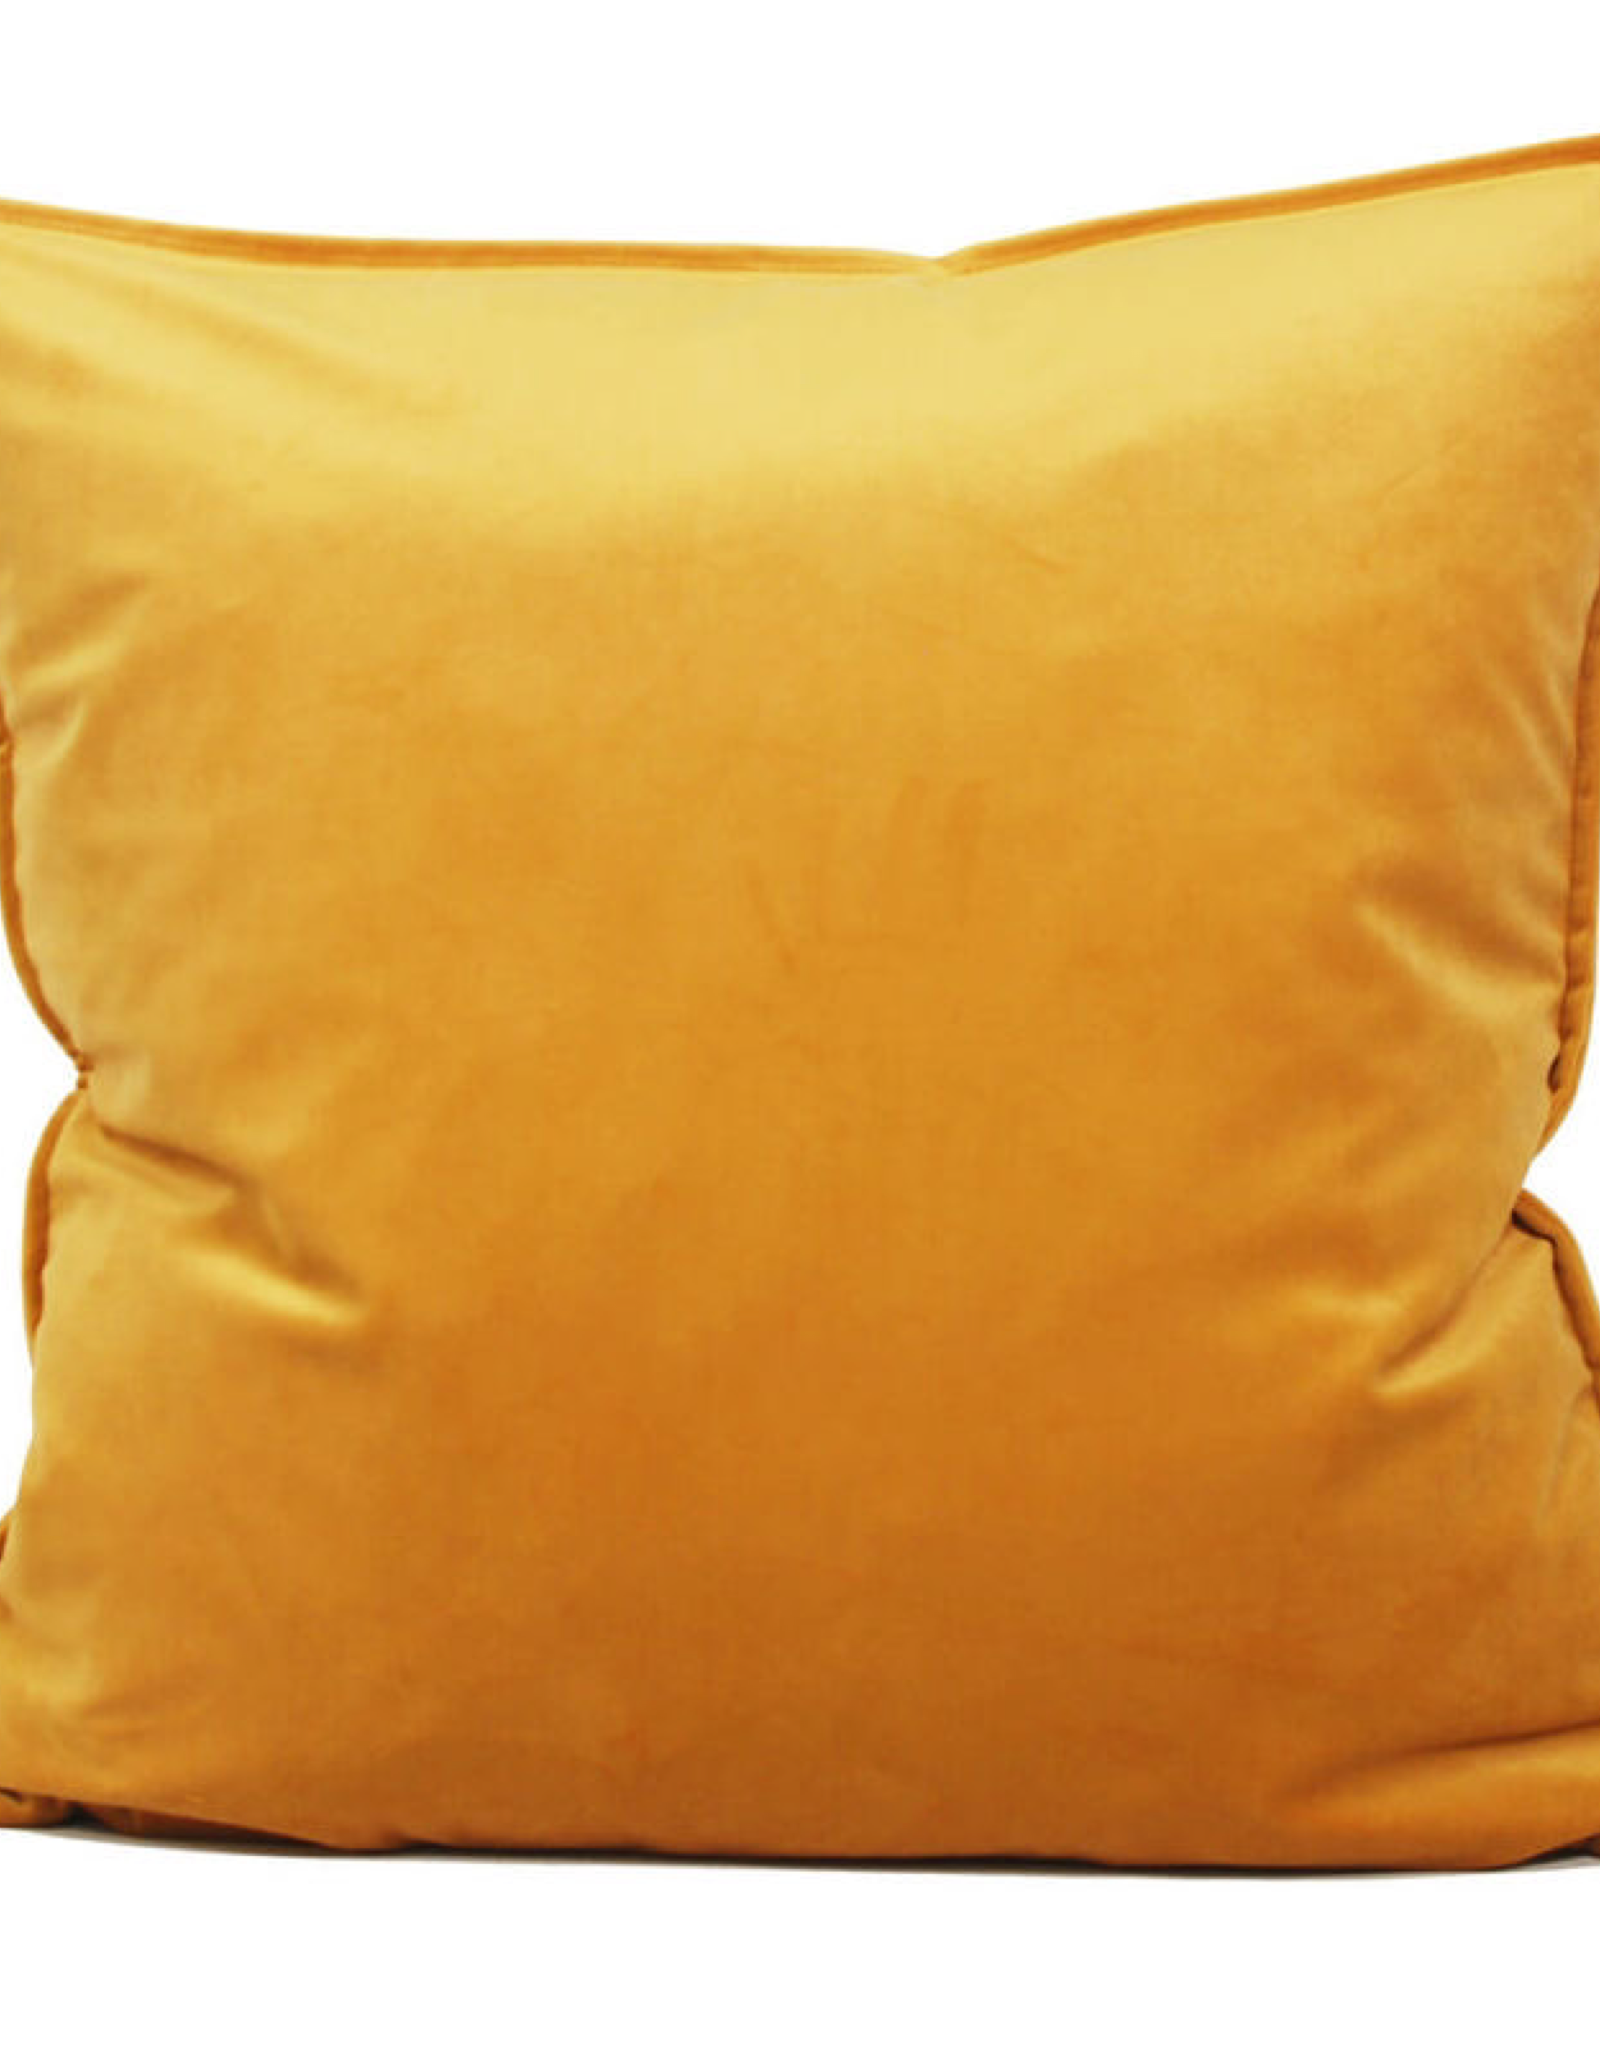 Daniadown Cushions Daniadown Dutch Velvet Mustard Toss 18 x18